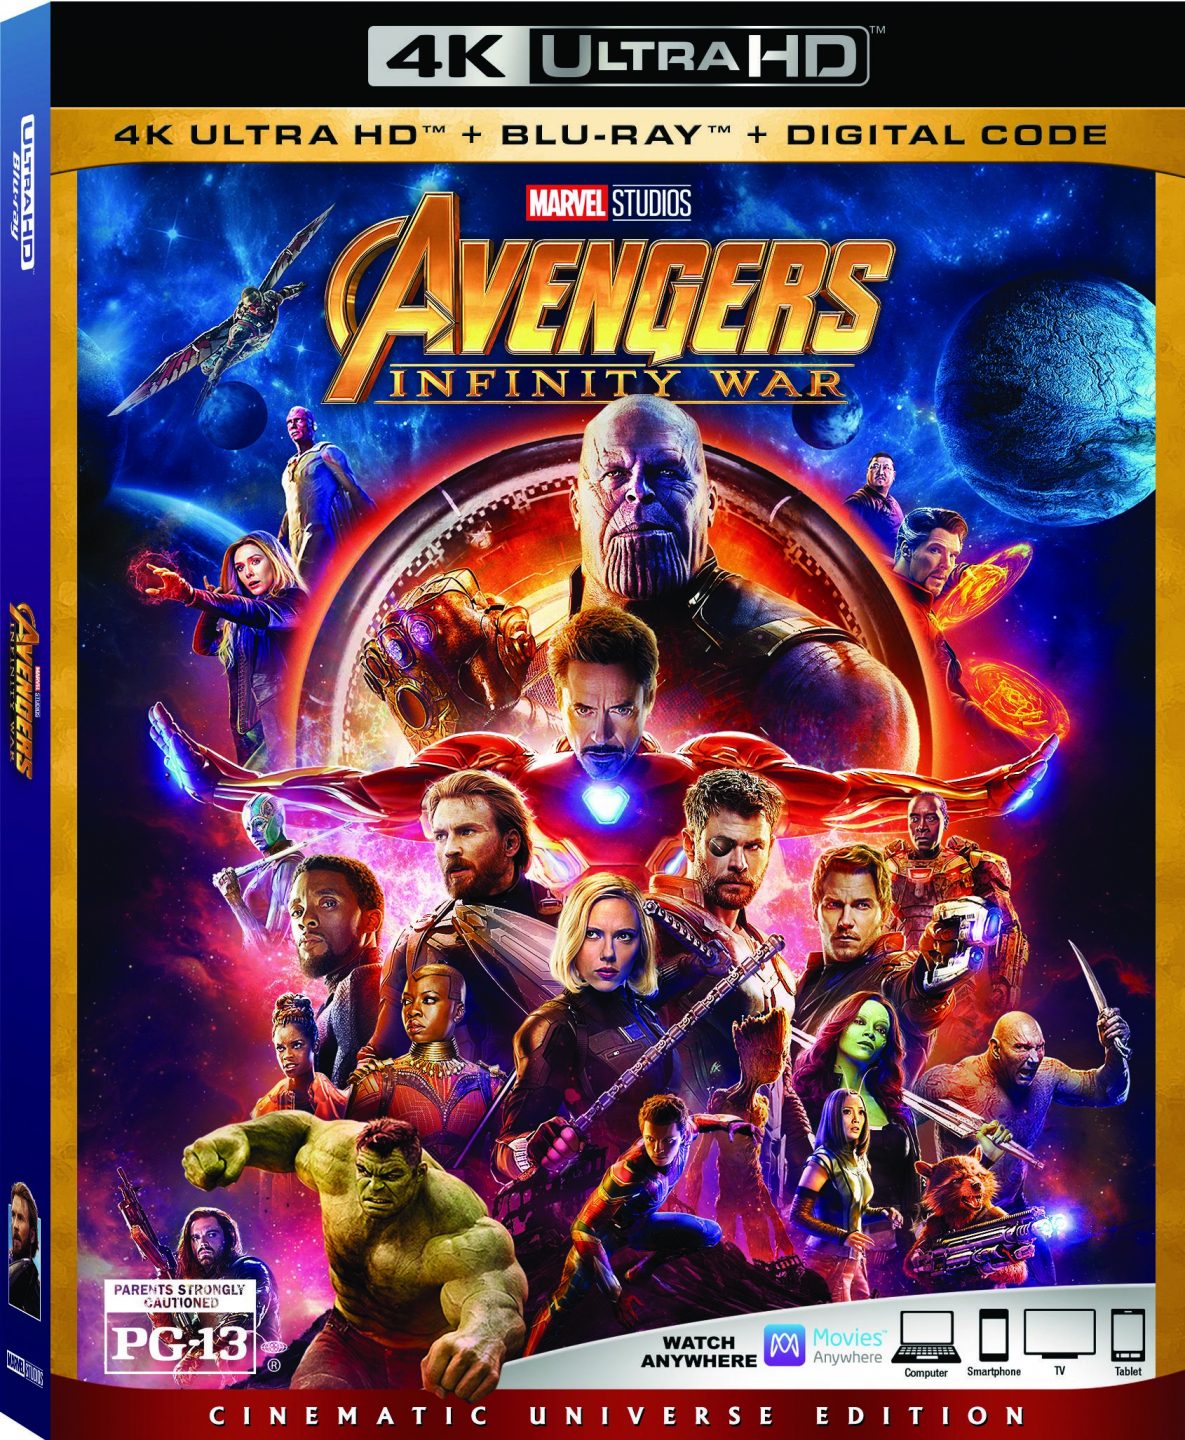 Avengers: Infinity War 4K Ultra HD Combo Pack cover (Walt Disney Studios Home Entertainment)